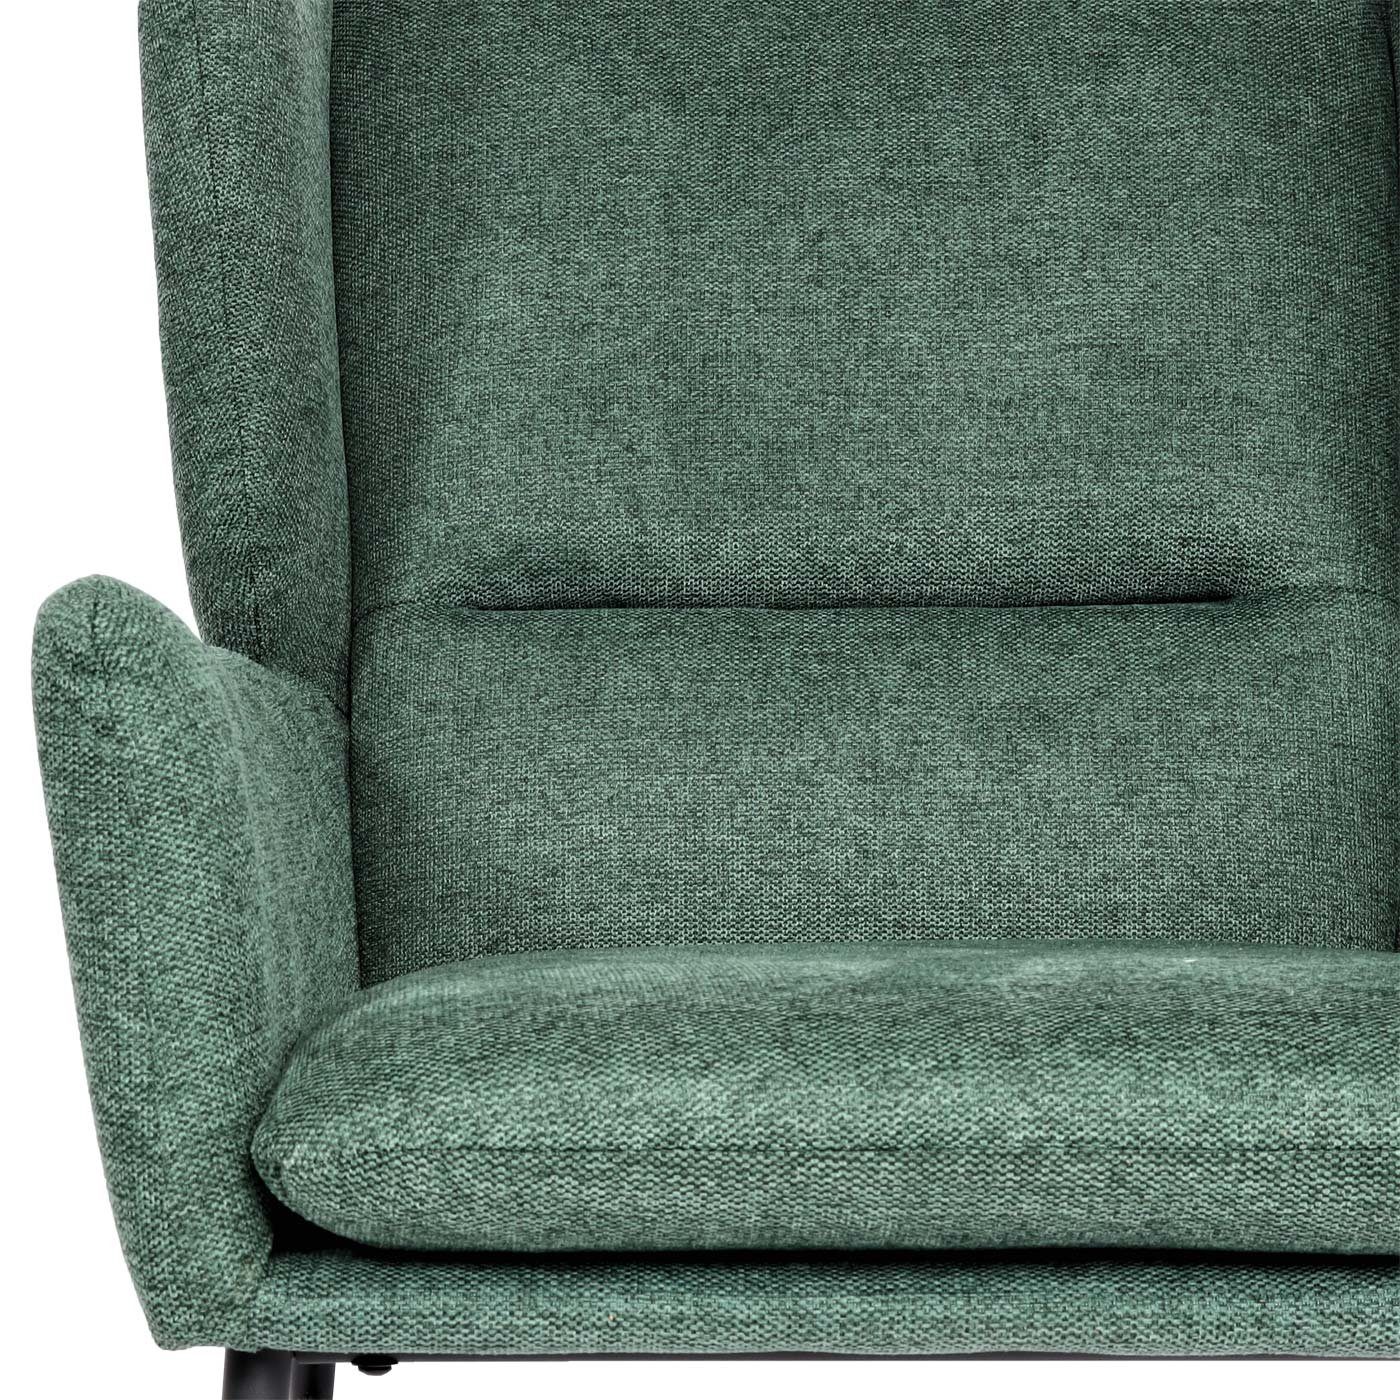 MCW-L62, breite Sitzkissen MCW abnehmbar grün Extra Loungesessel Sitzfläche,